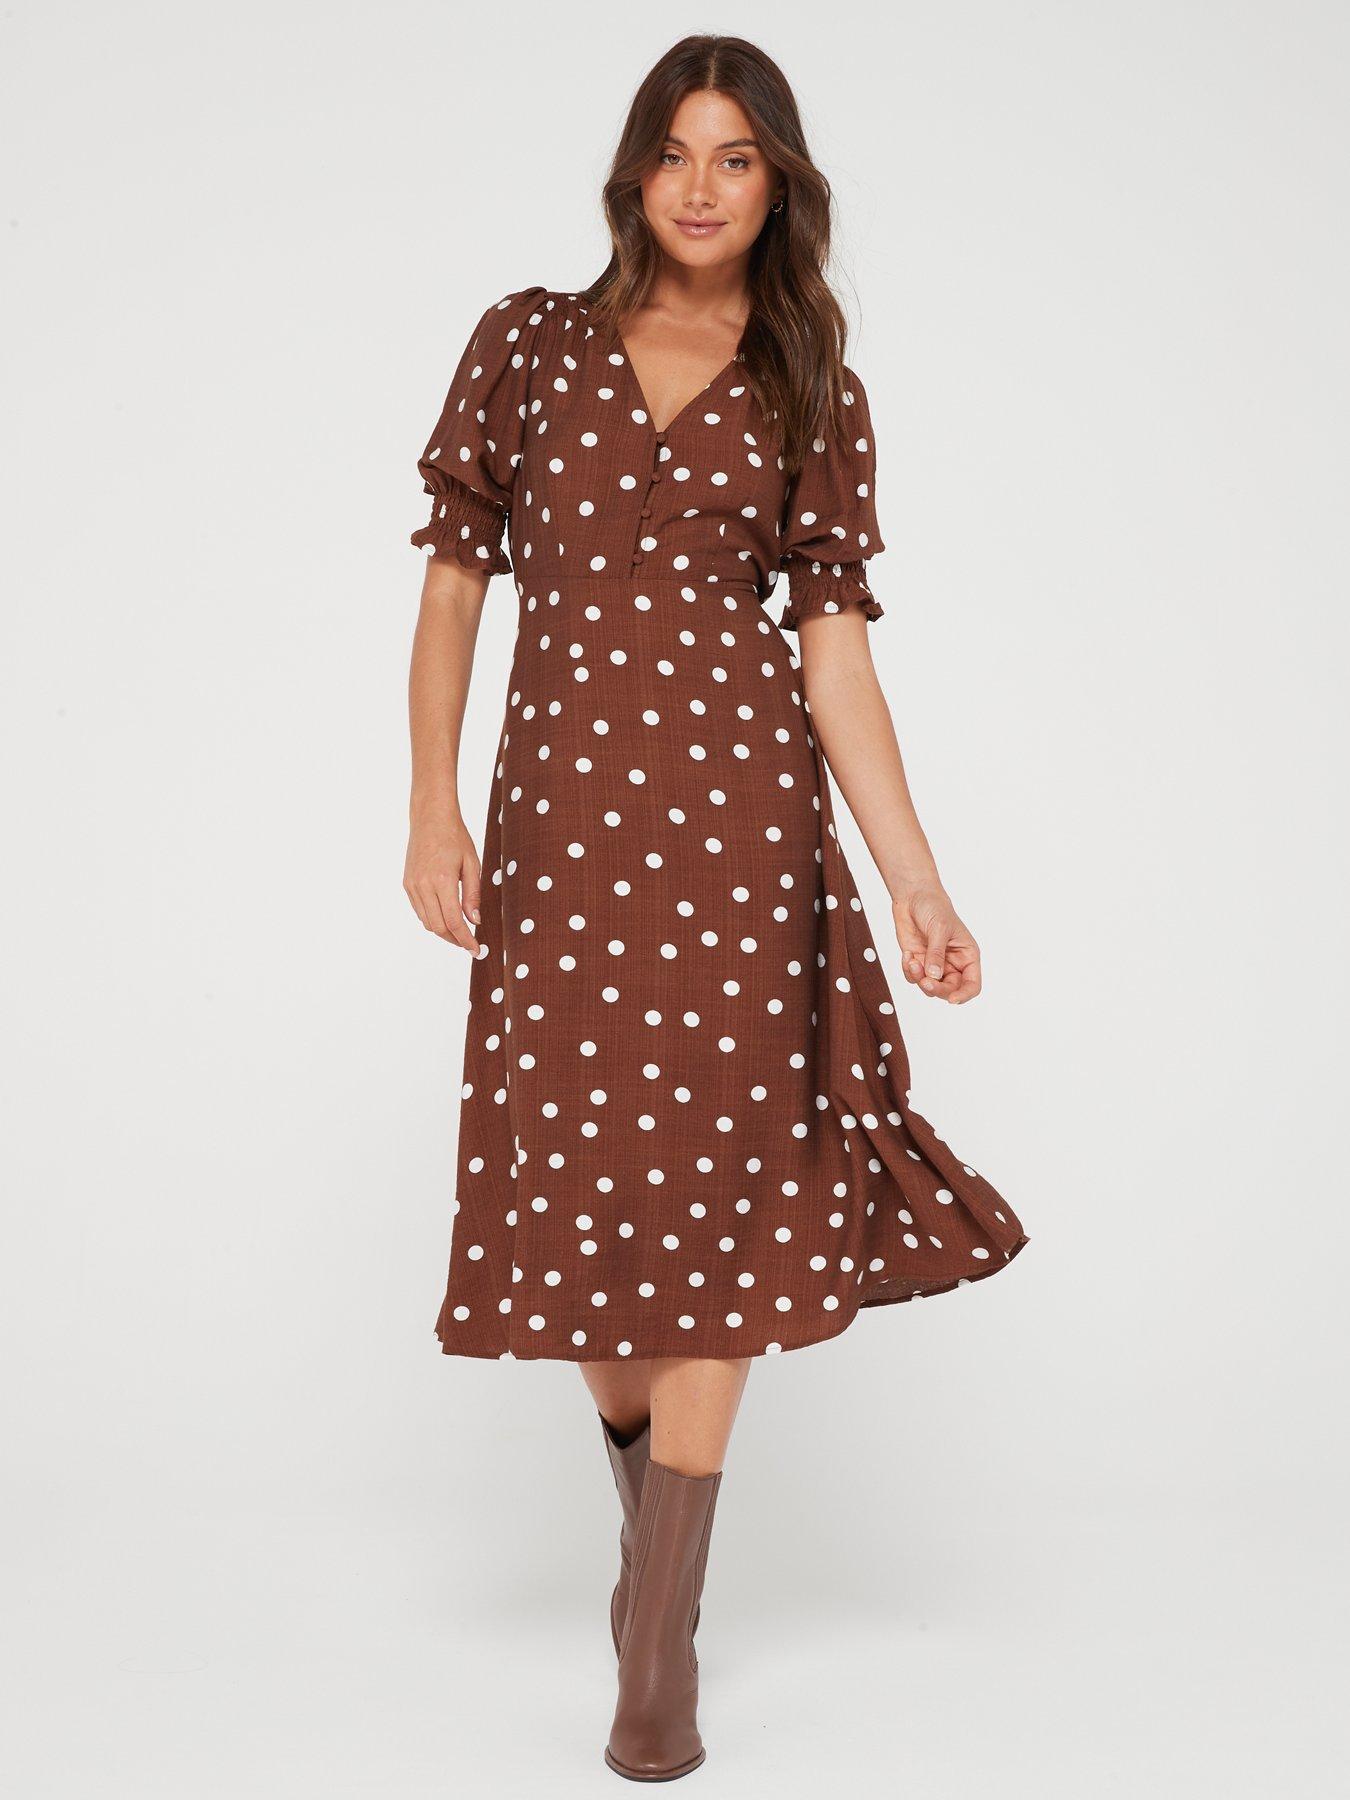 Vero Moda Becca Button Dress - Brown